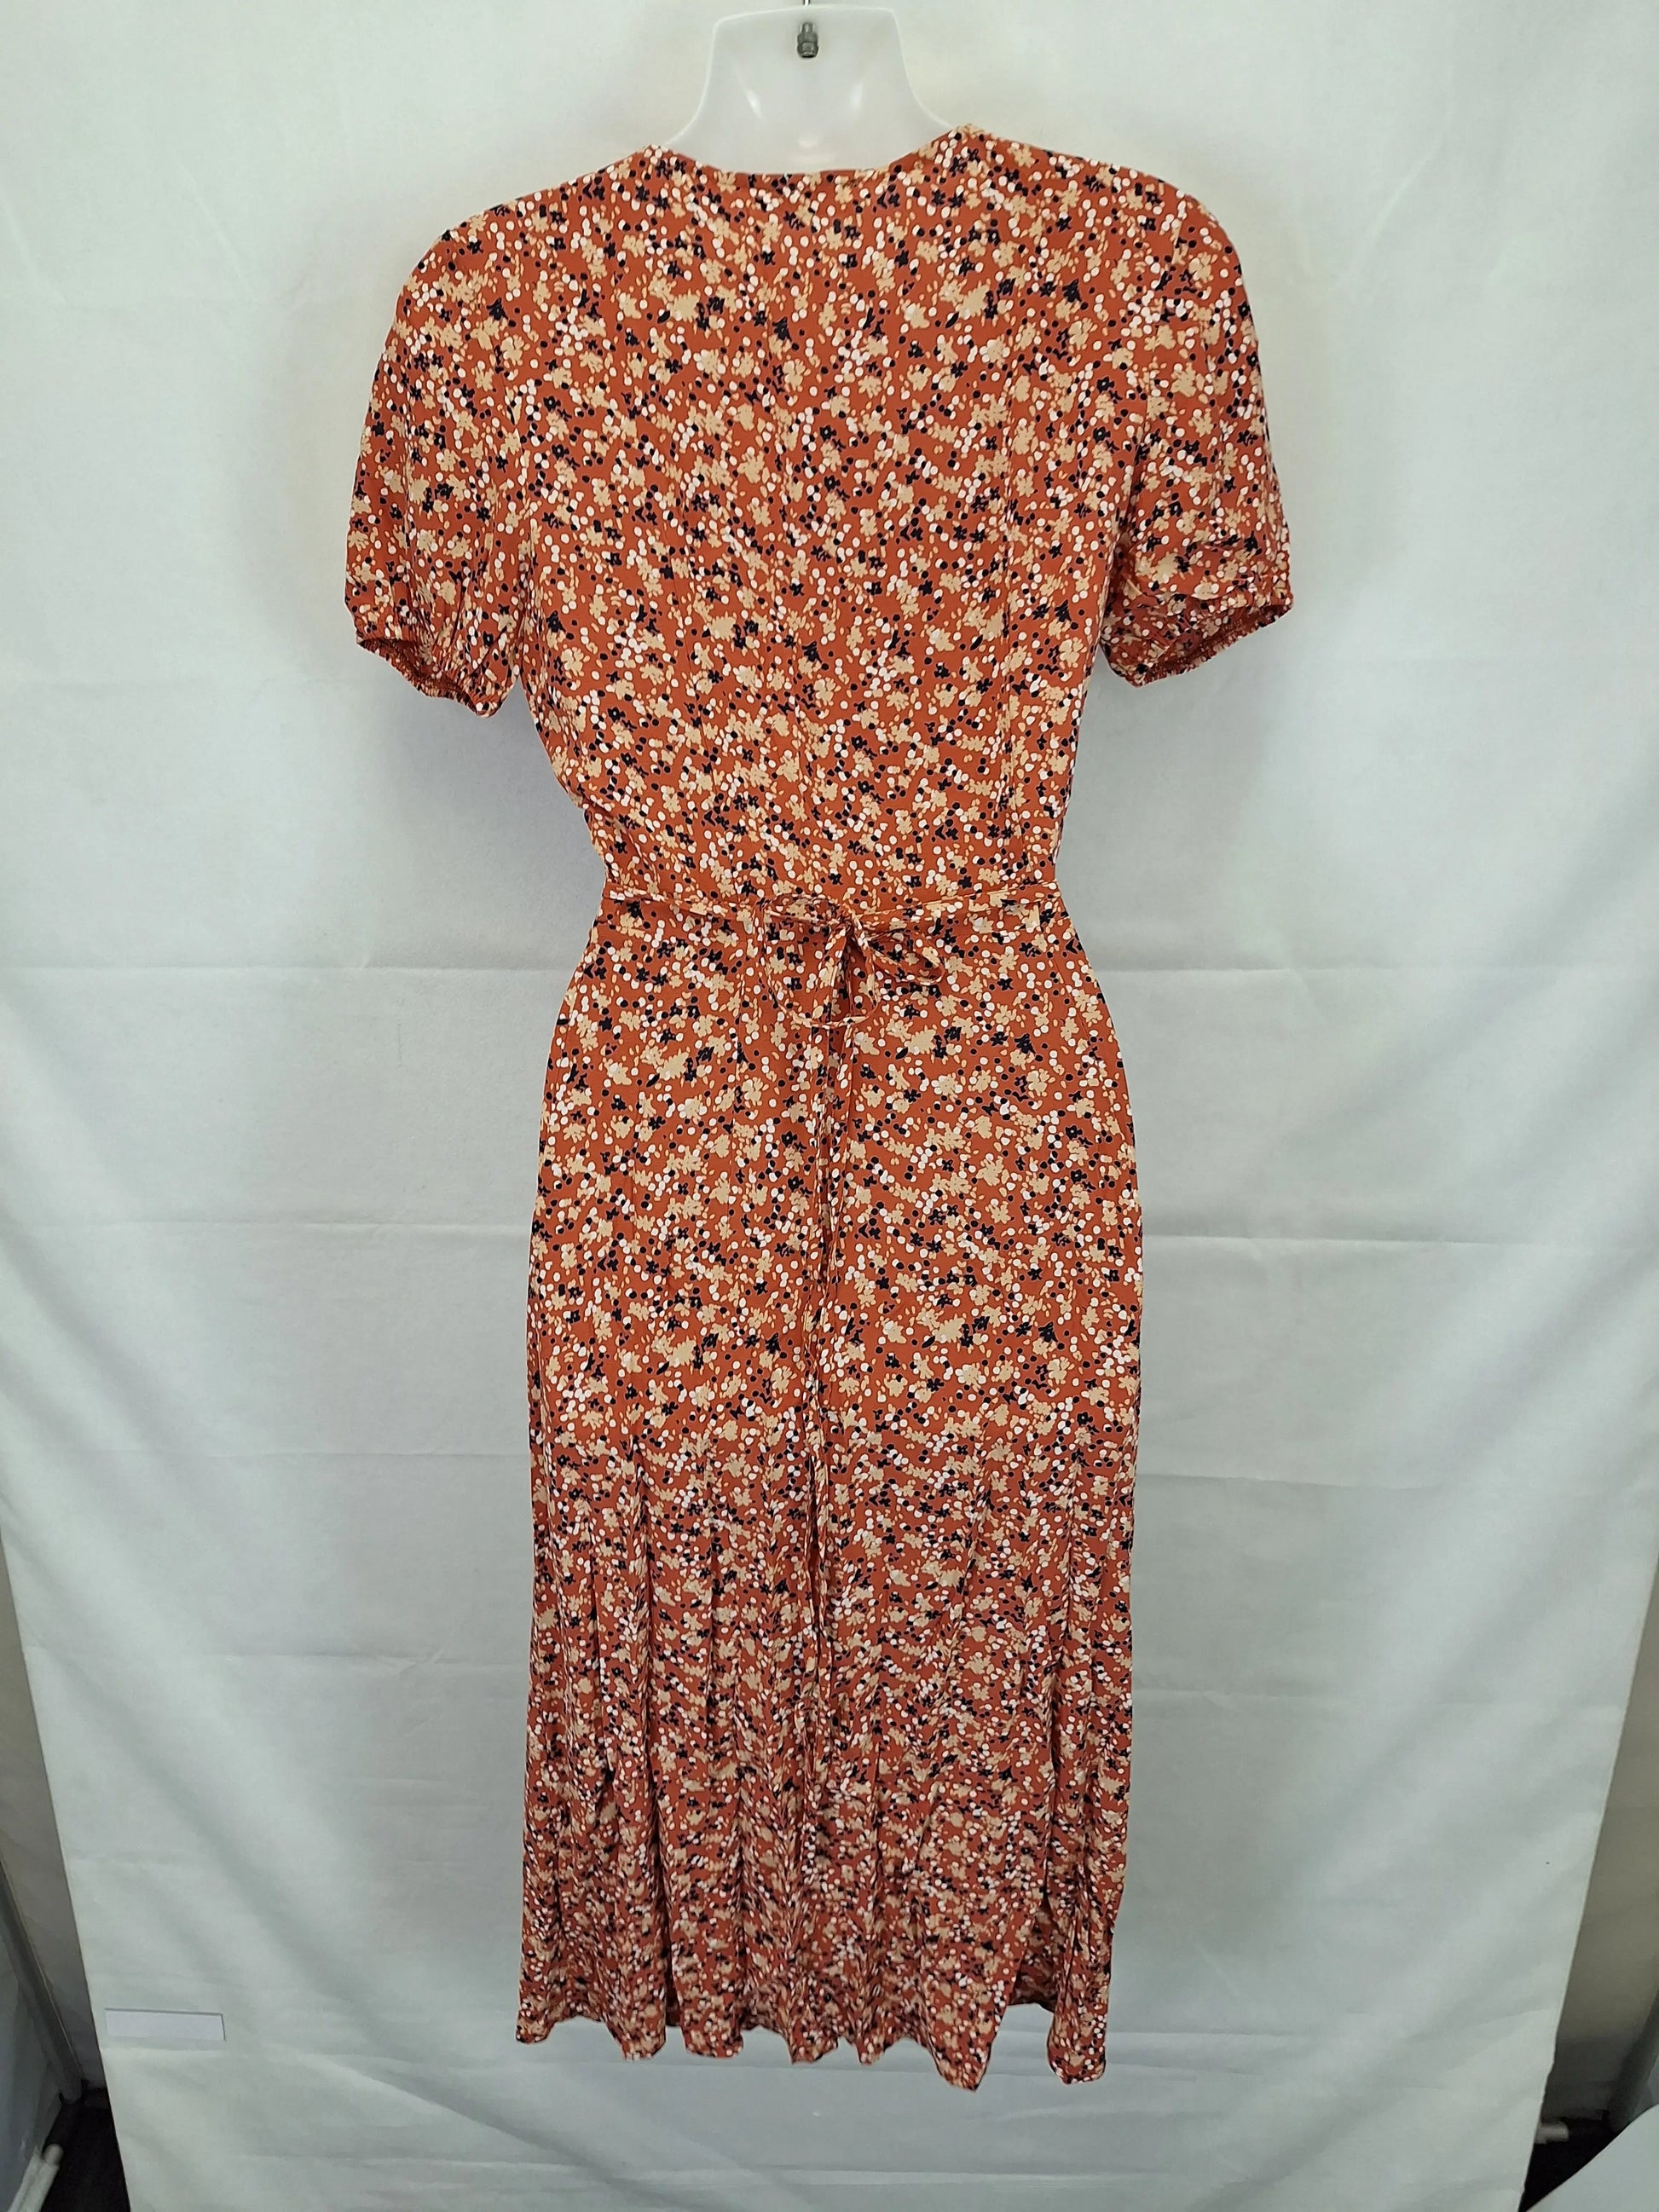 Kookai Tallis Wrap Midi Dress Size 6 by SwapUp-Online Second Hand Store-Online Thrift Store